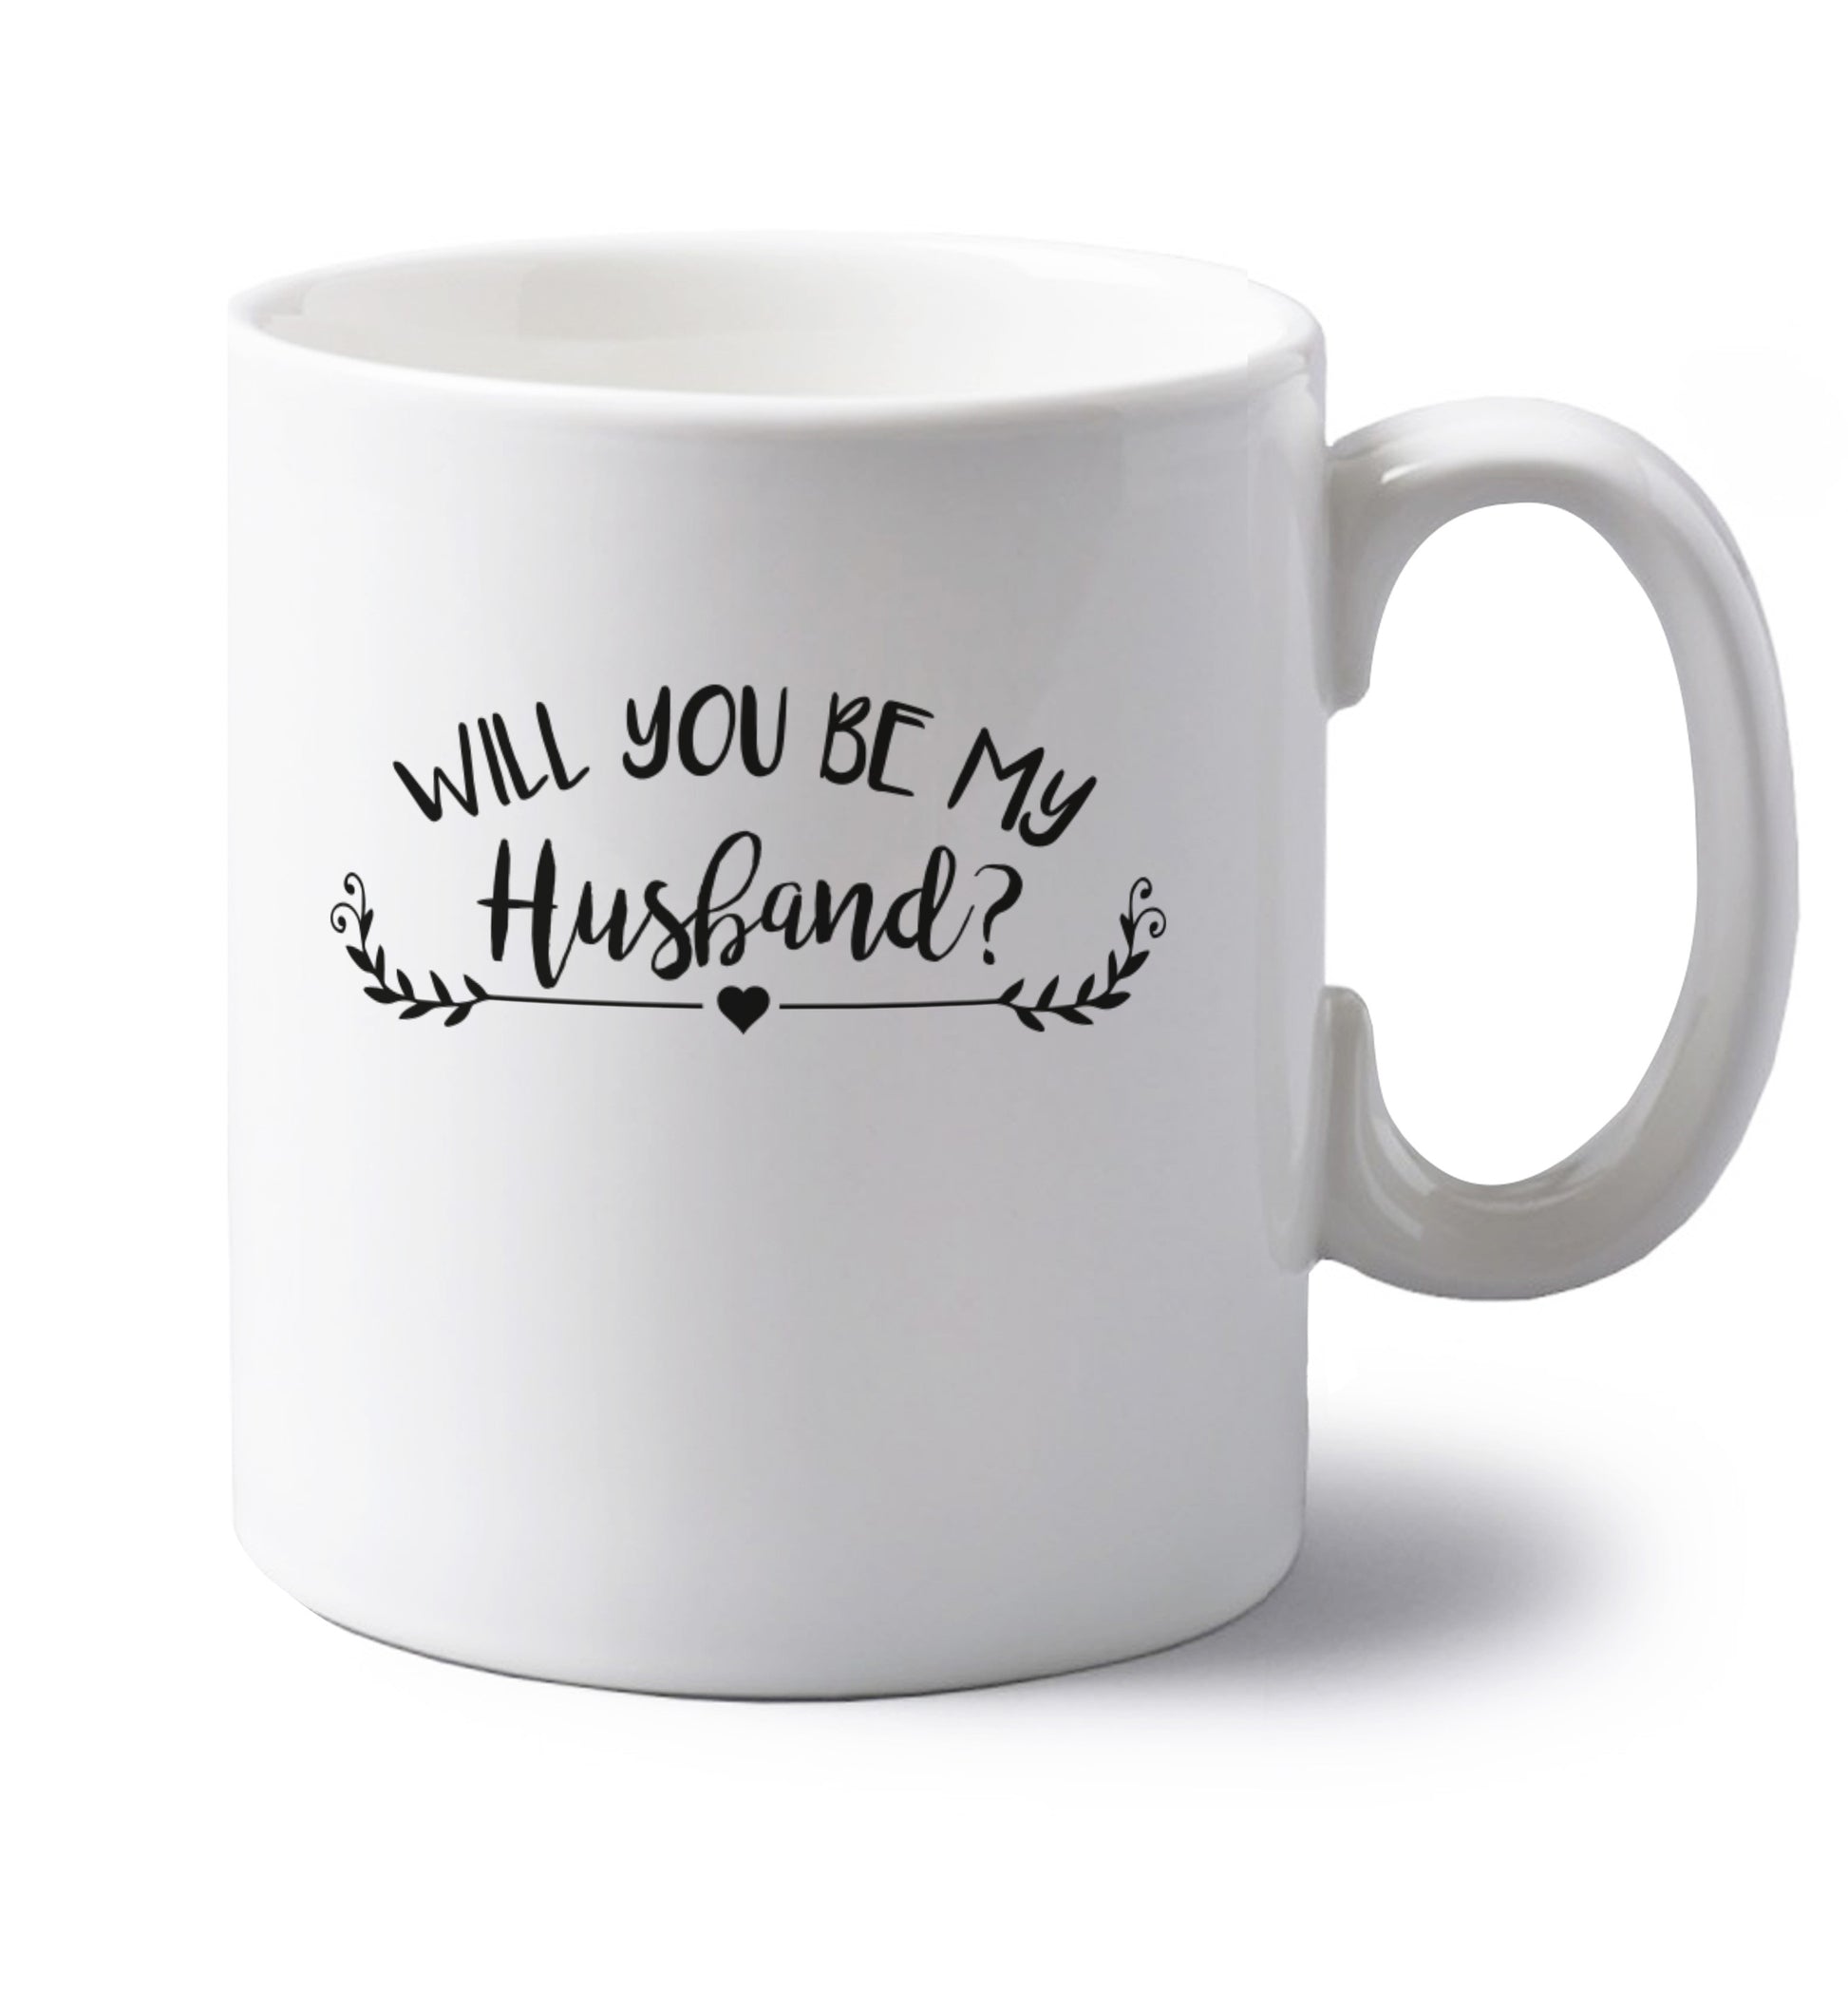 Will you be my husband? left handed white ceramic mug 